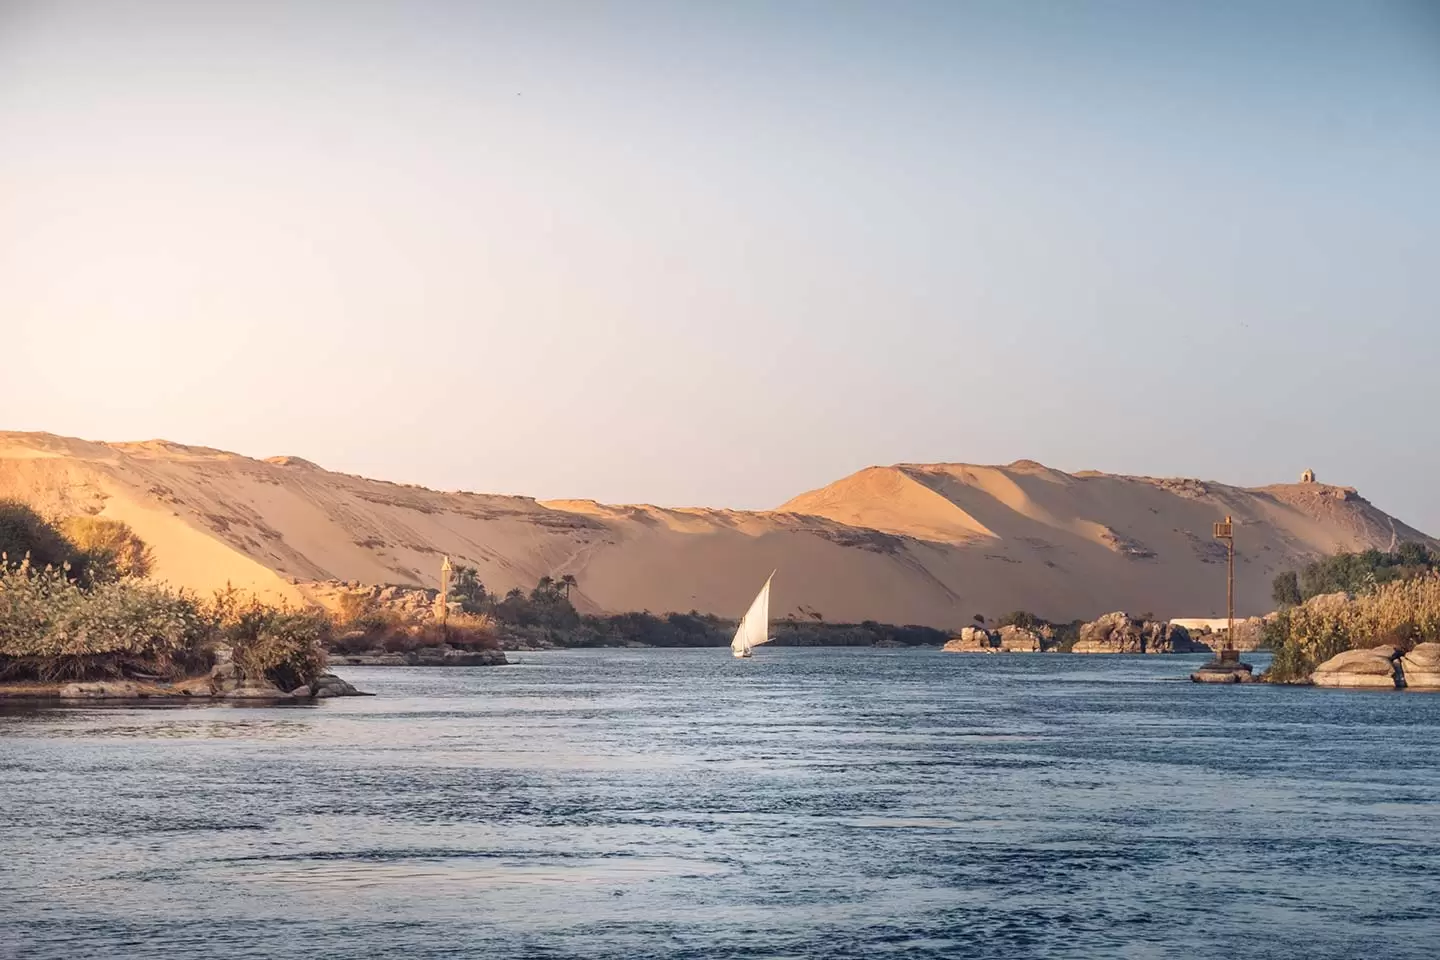 Egypt Travel Tips - Safest way to get around Egypt